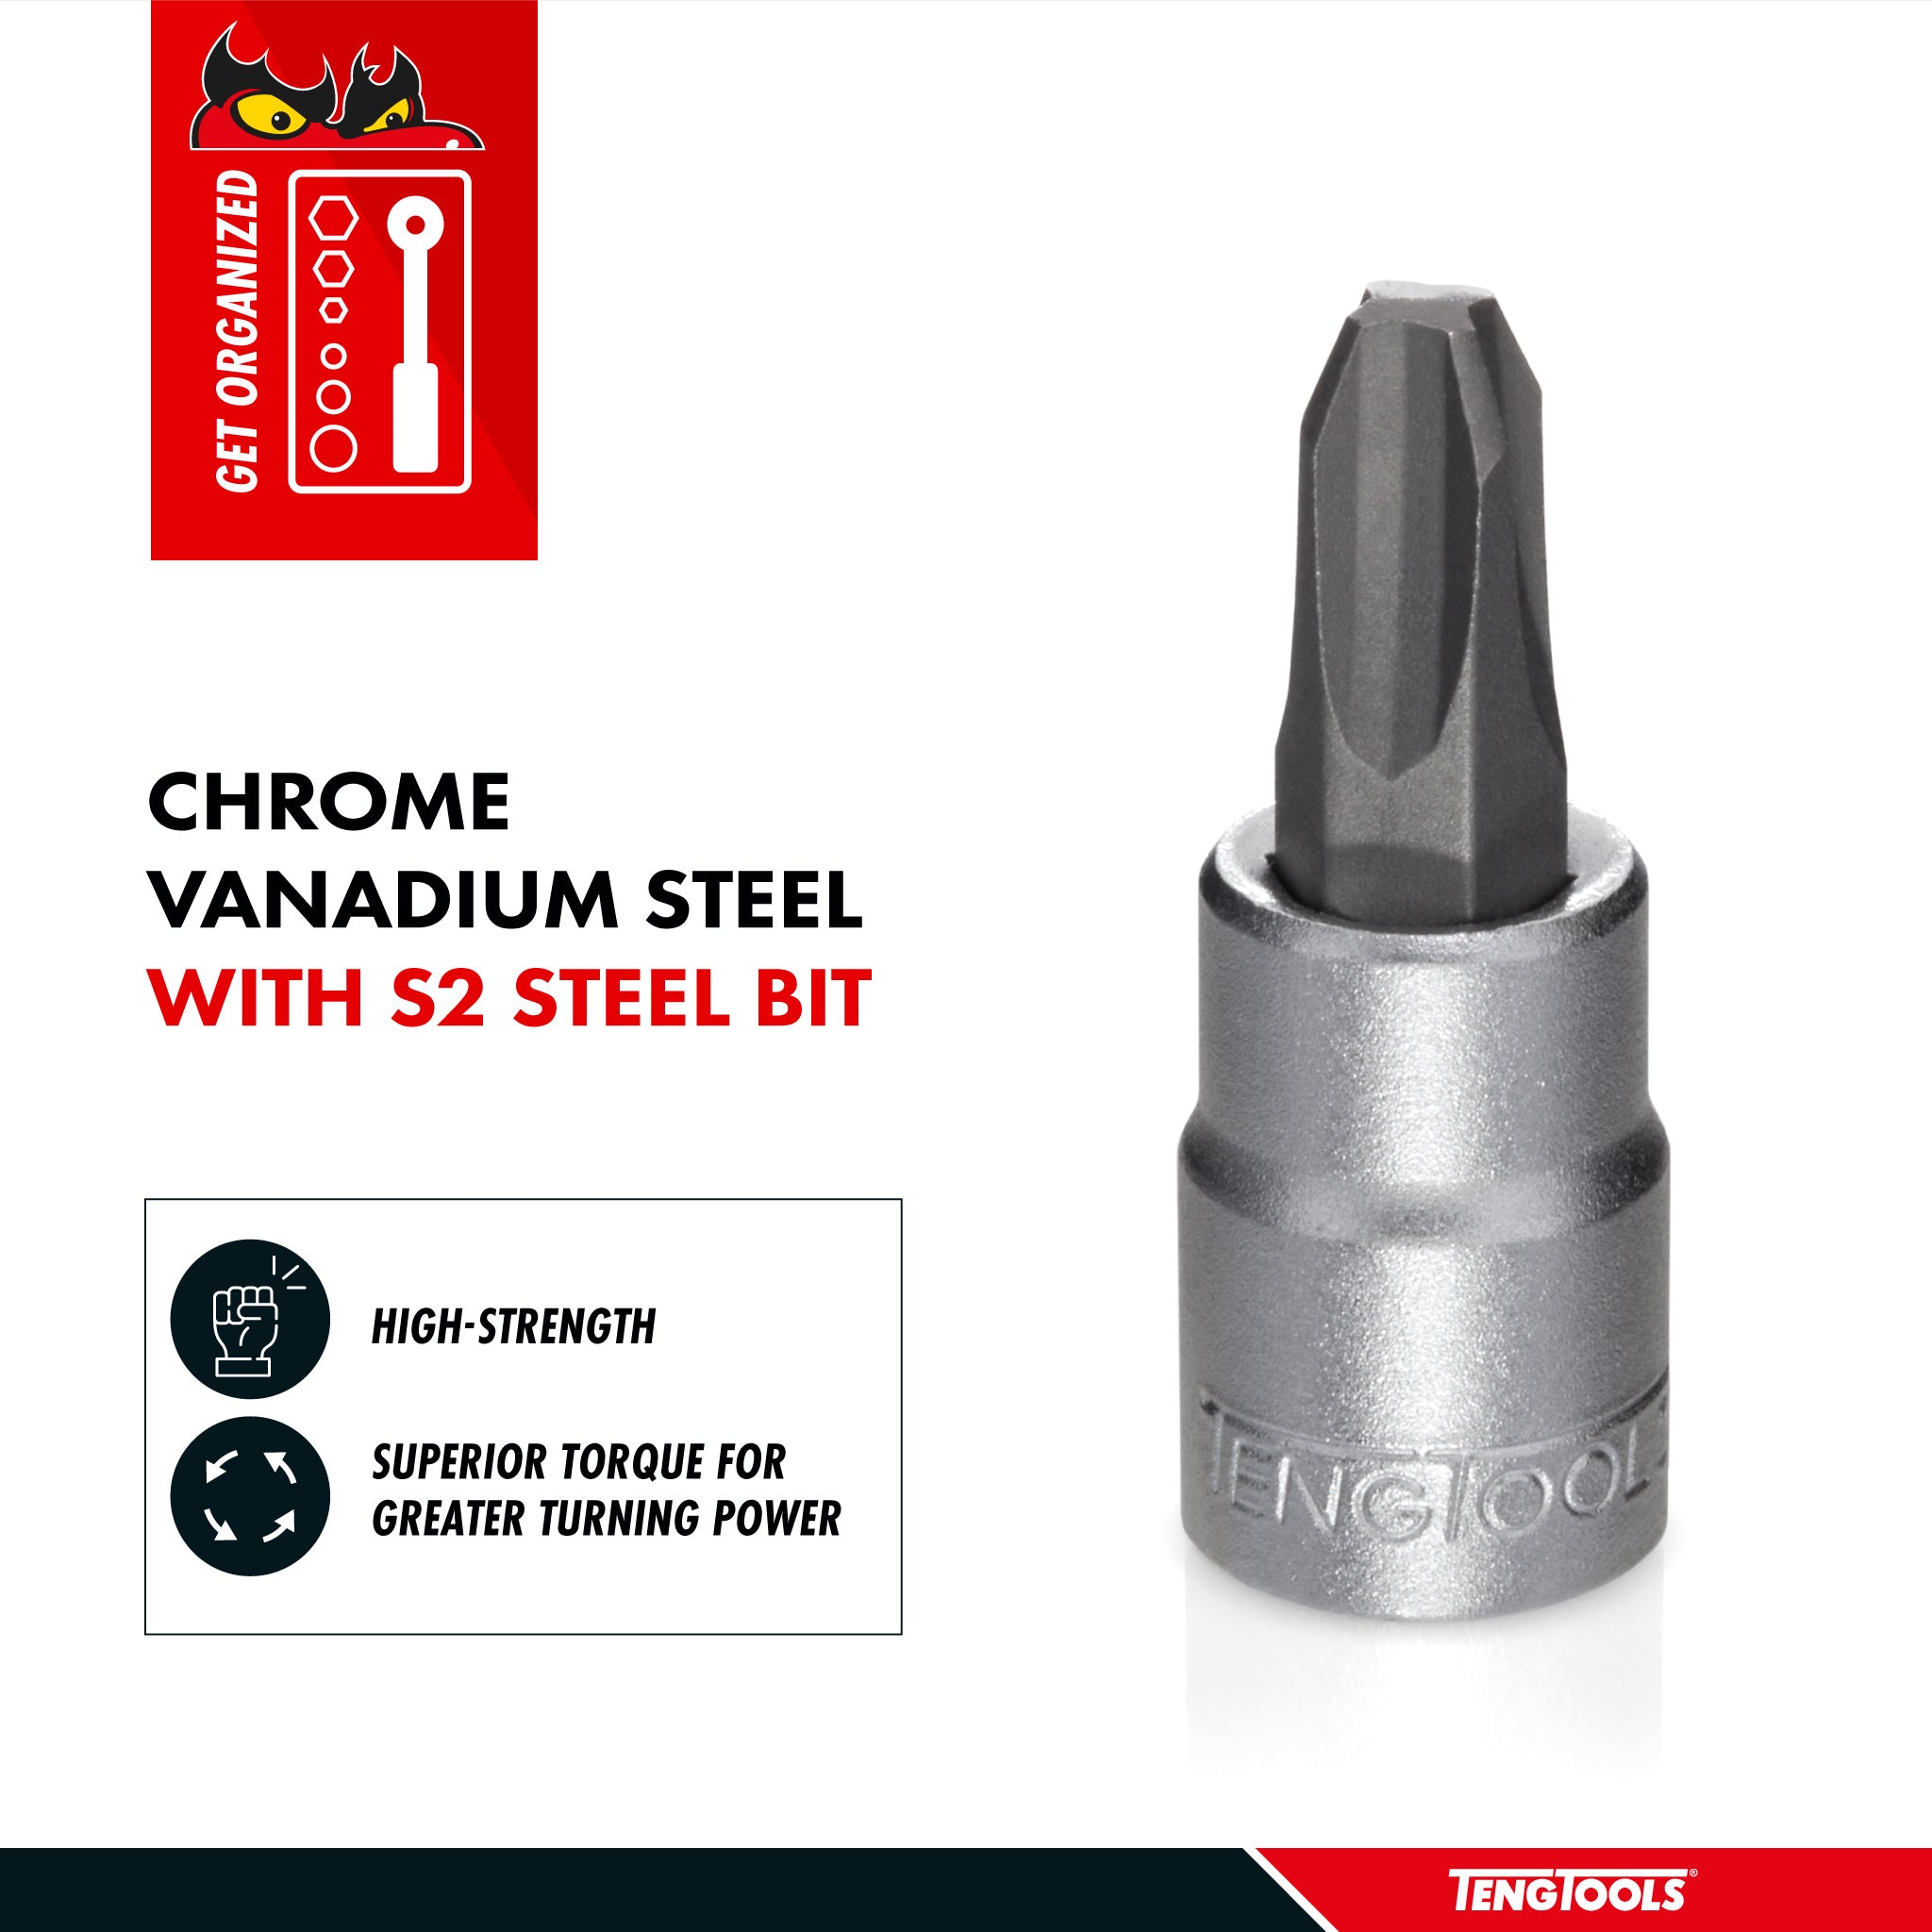 Teng Tools 1/4 Inch Drive Phillips PH Chrome Vanadium Sockets